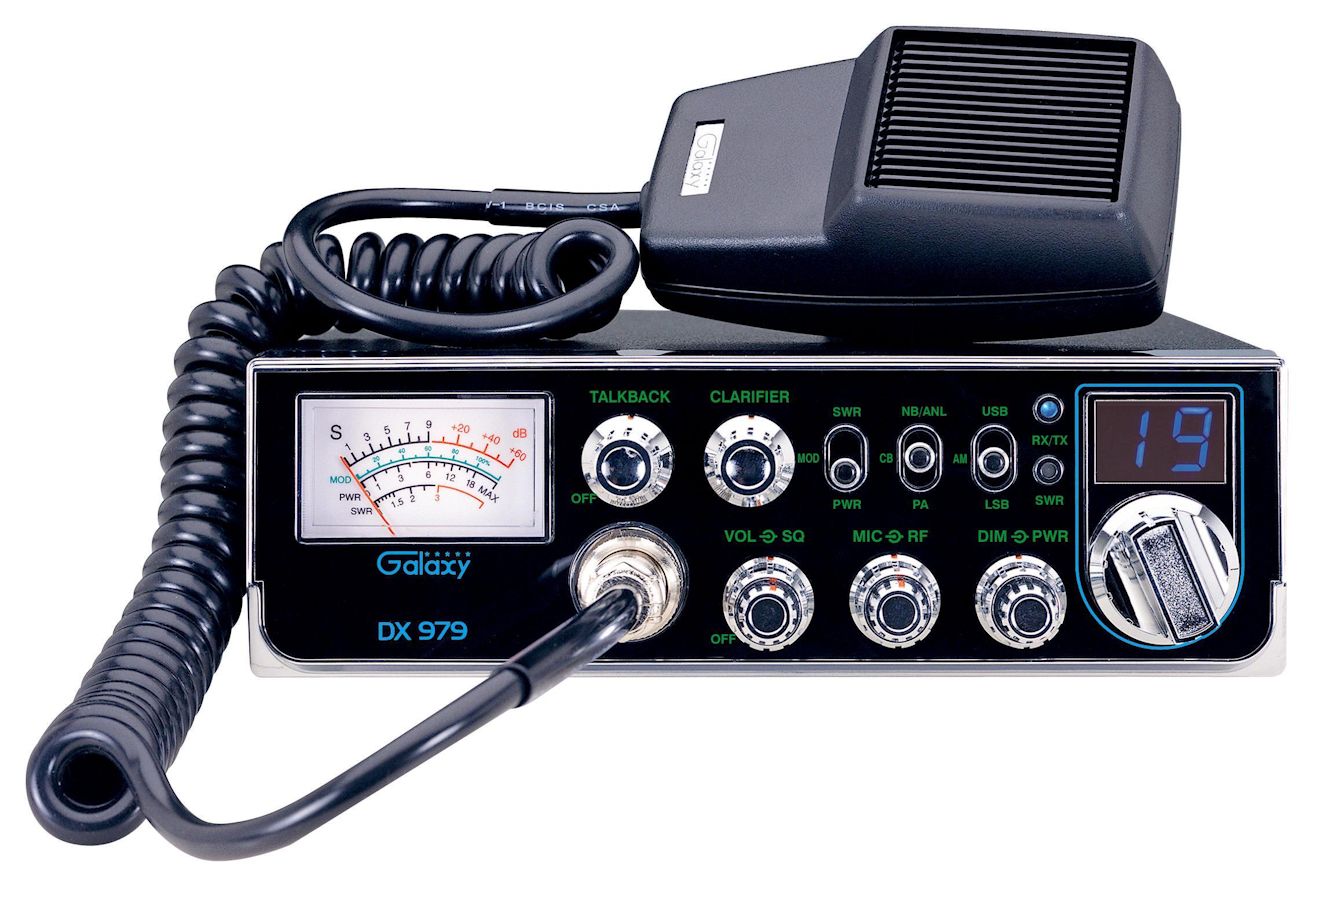 Galaxy DX 979 - Mobile CB Radio